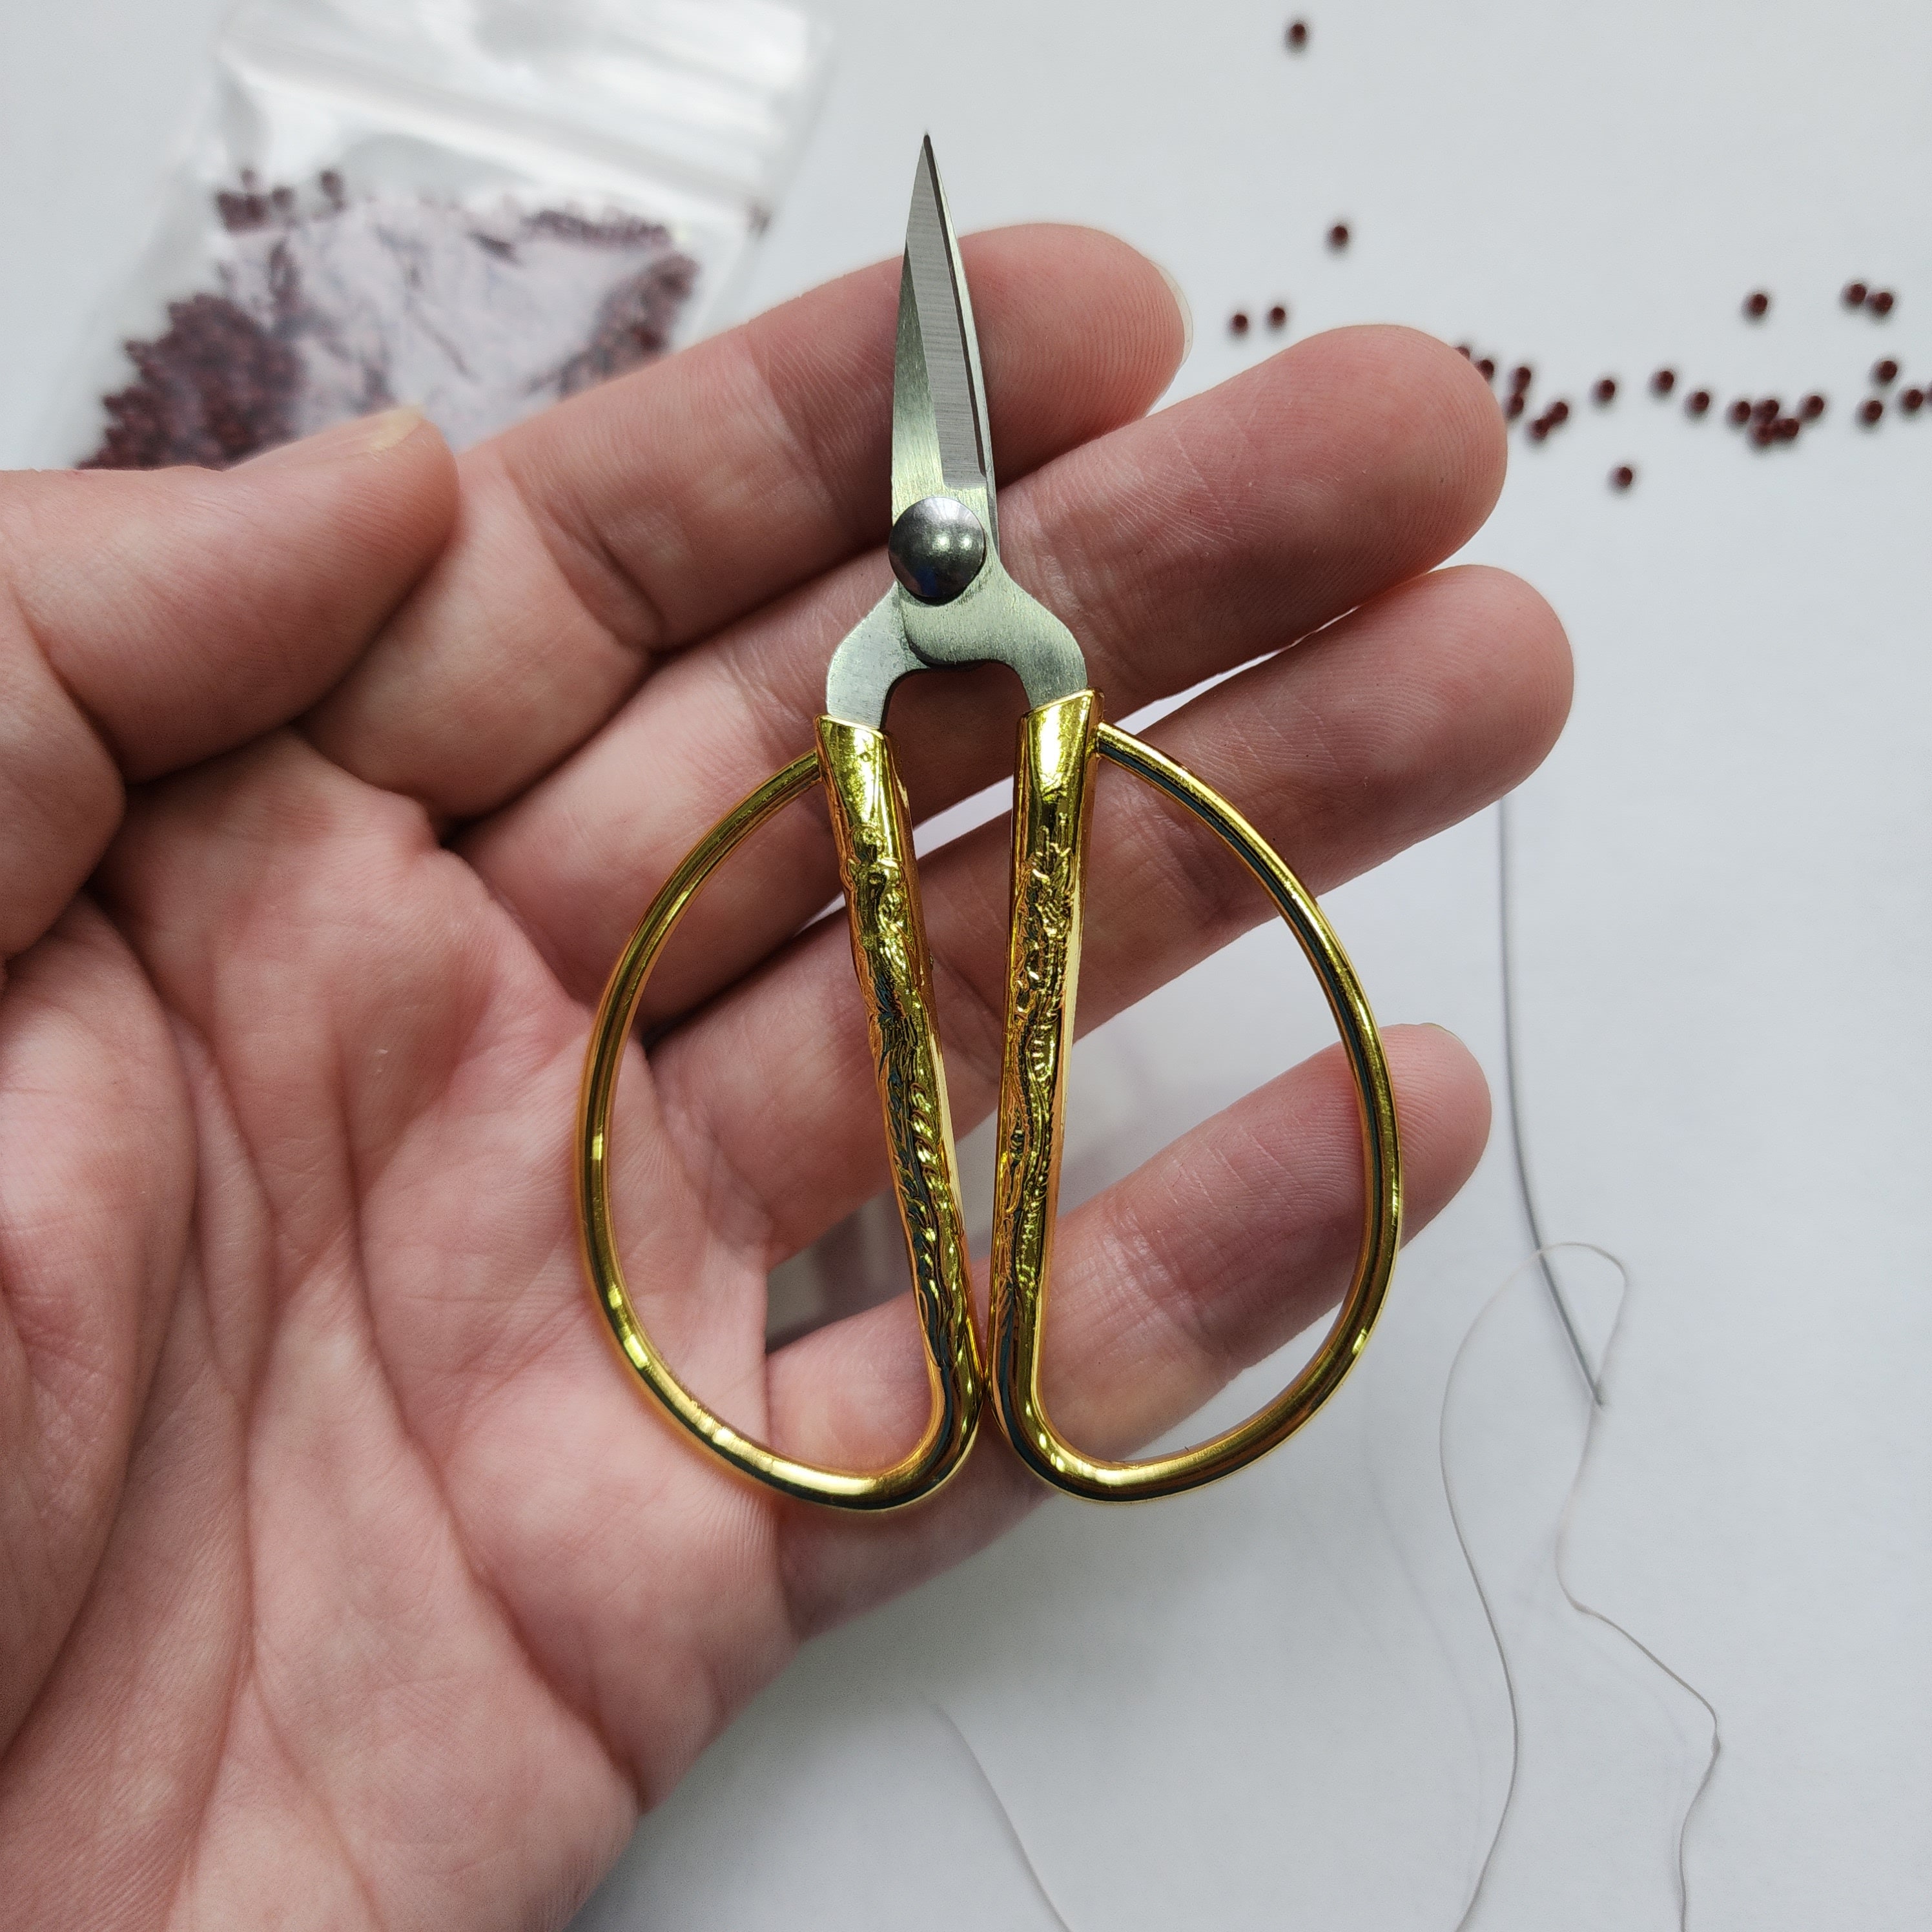 Thread Snips - Stainless Steel Scissors - 11cm thread cutter